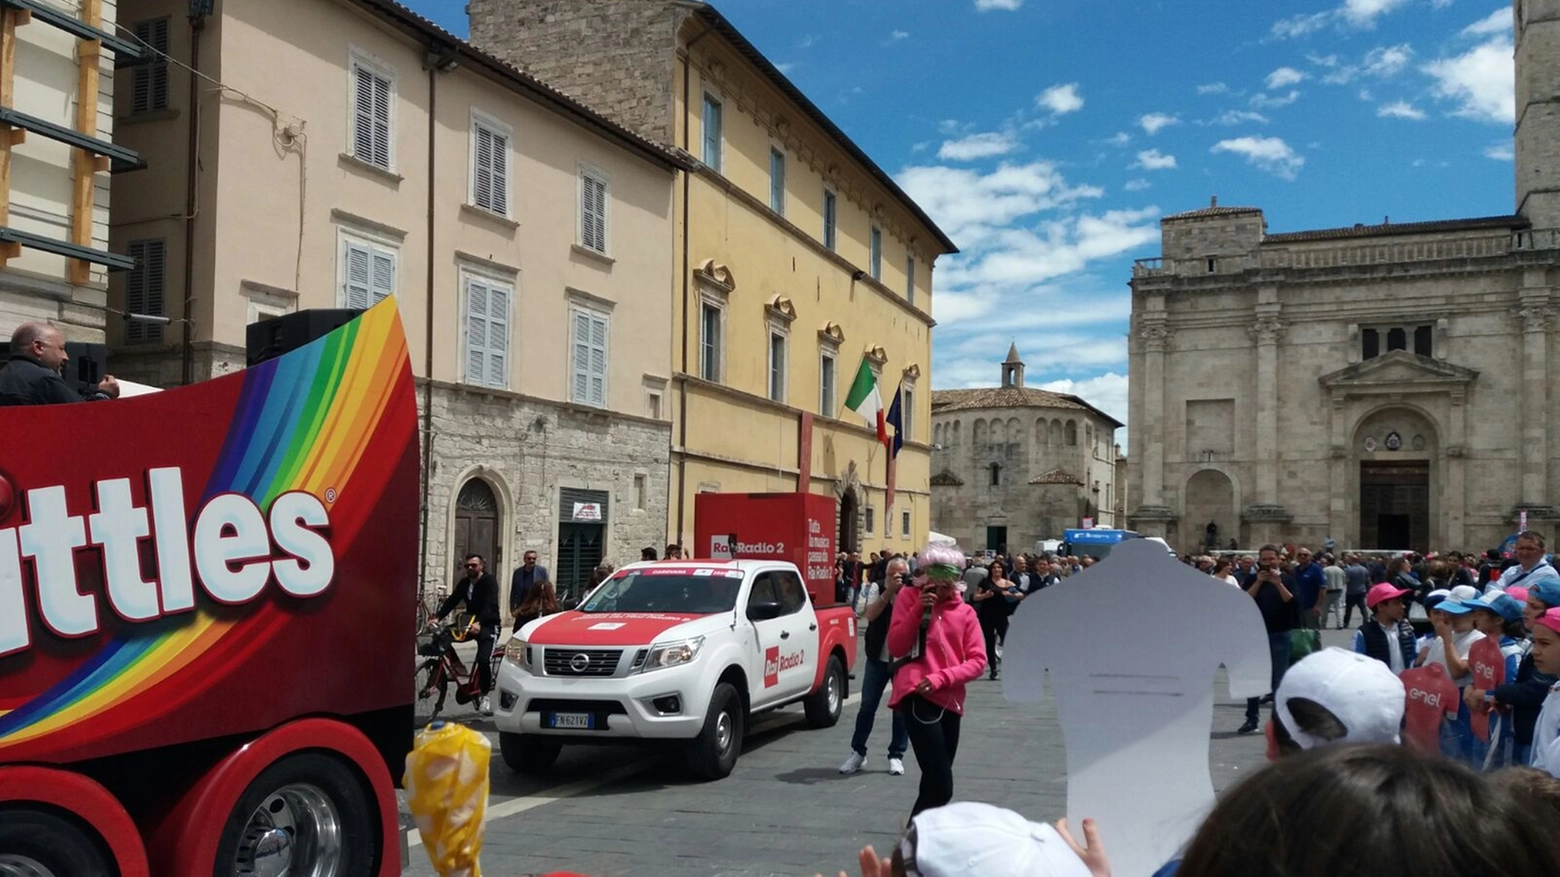 La Carovana del Giro d'Italia in piazza Arringo